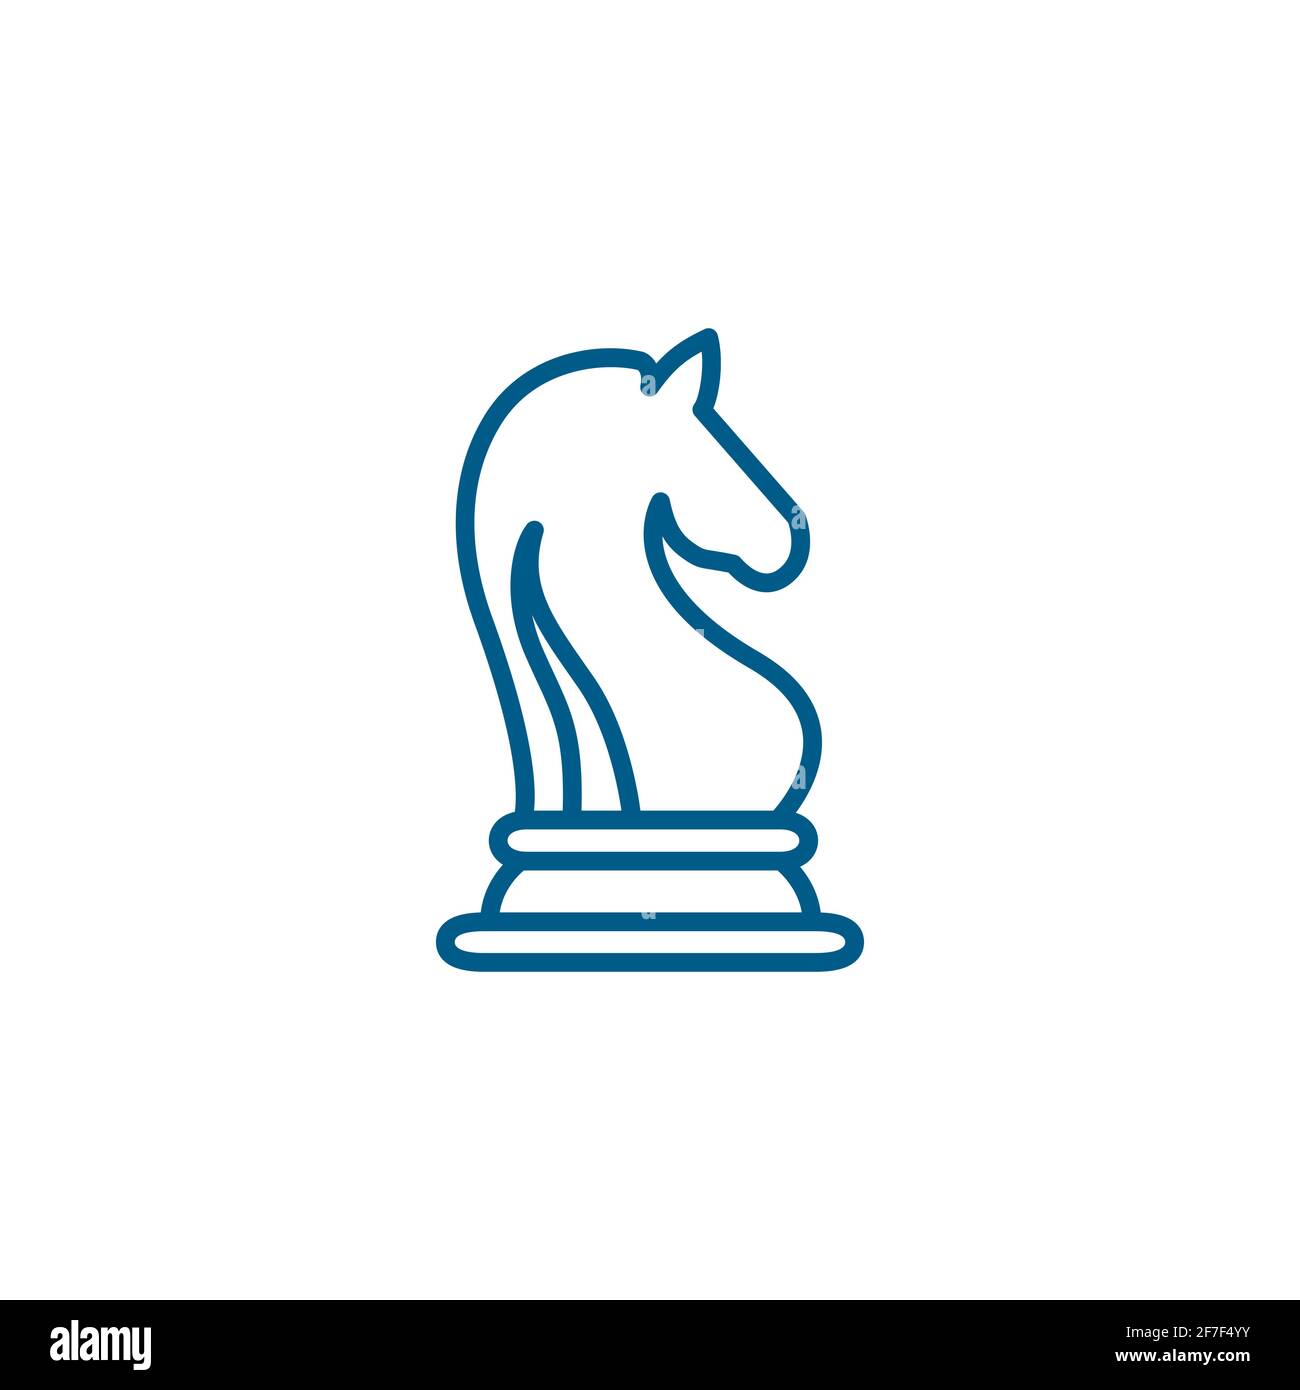 horse chess piece icon Stock Vector Image & Art - Alamy